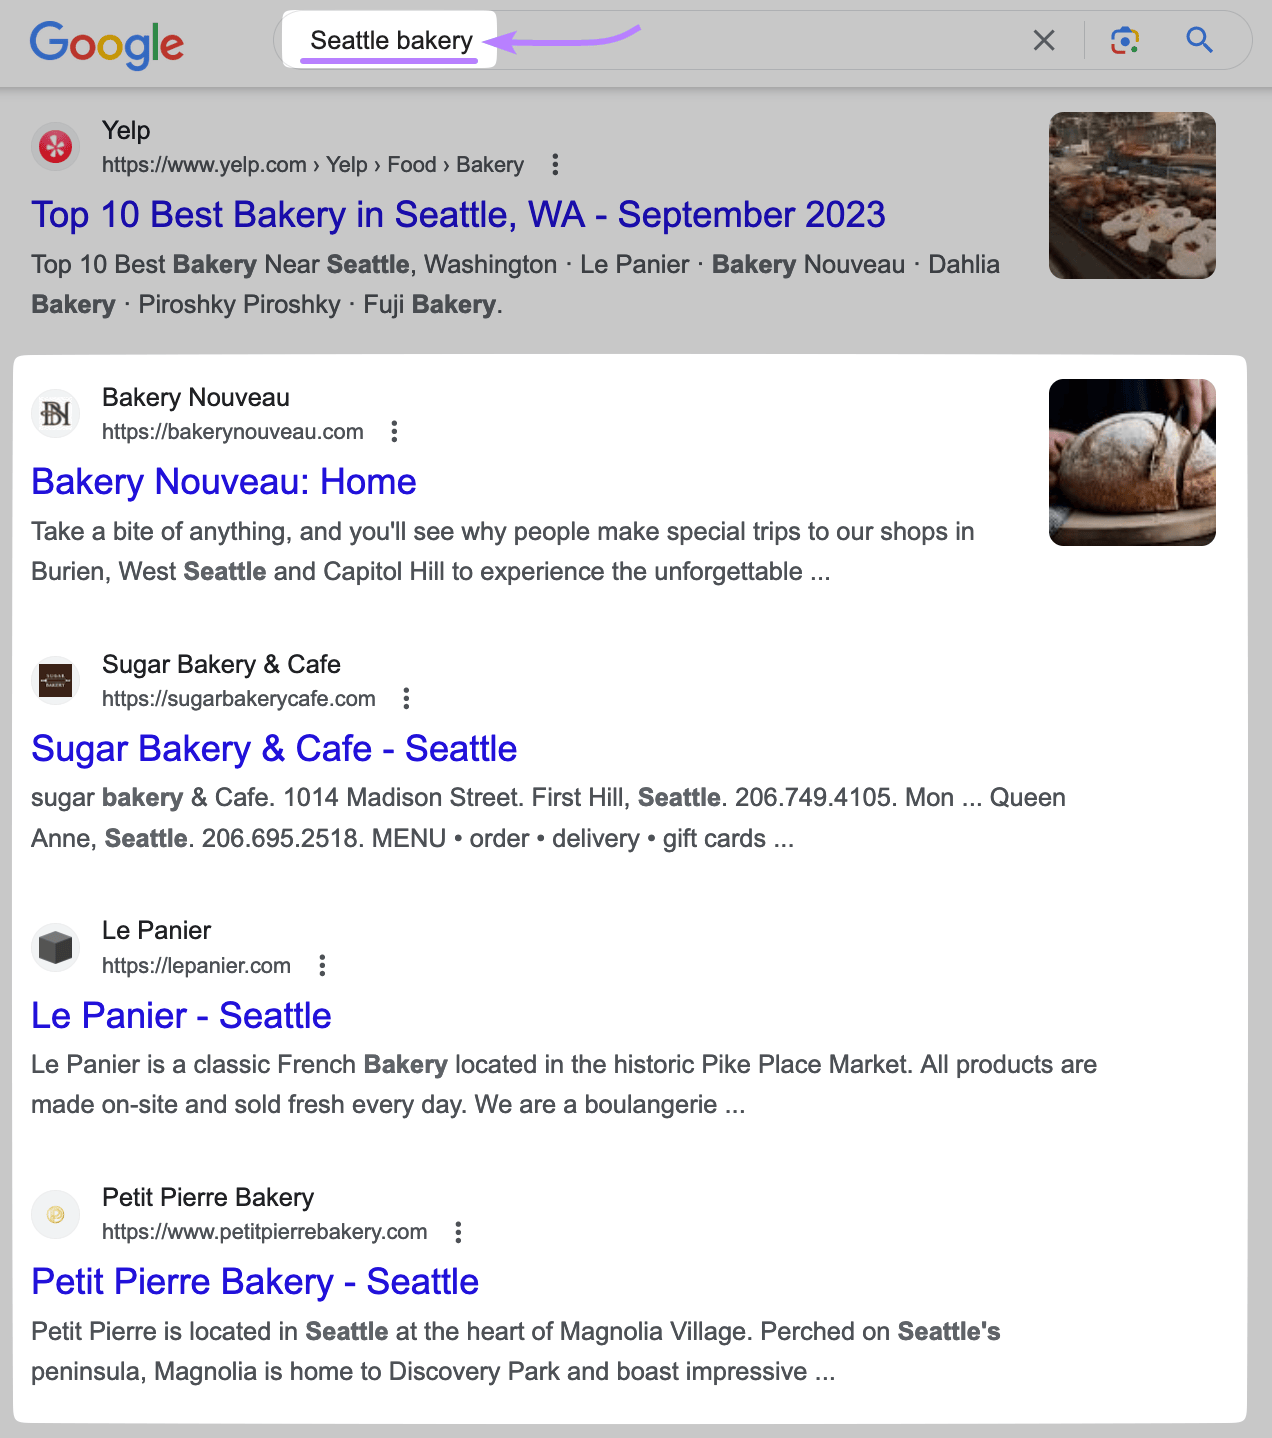 Google's SERP for "Seattle bakery"